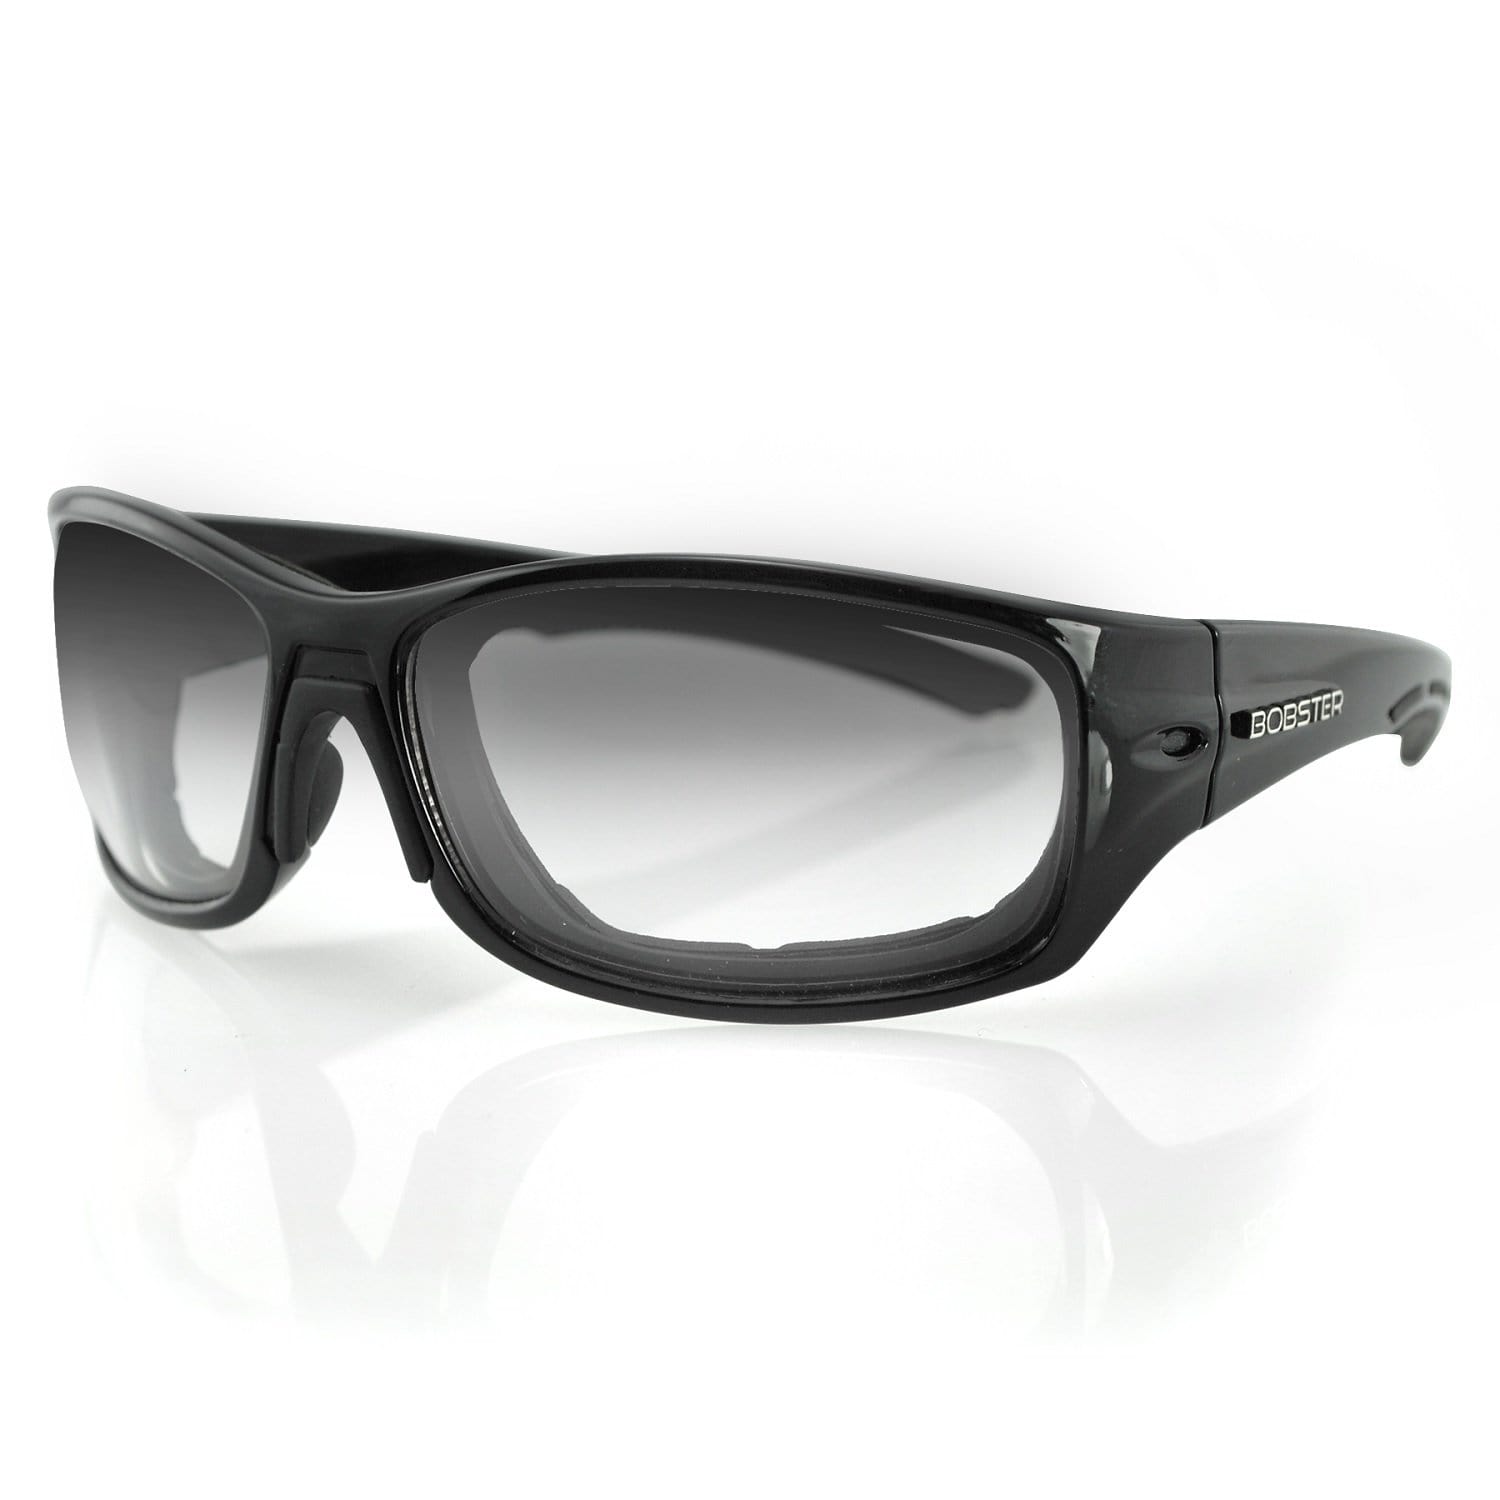 Bobster Apparel : Eyewear - Sunglasses Bobster Rukus Riding Sunglass-Blk-Anti-fog Photochromic Lens